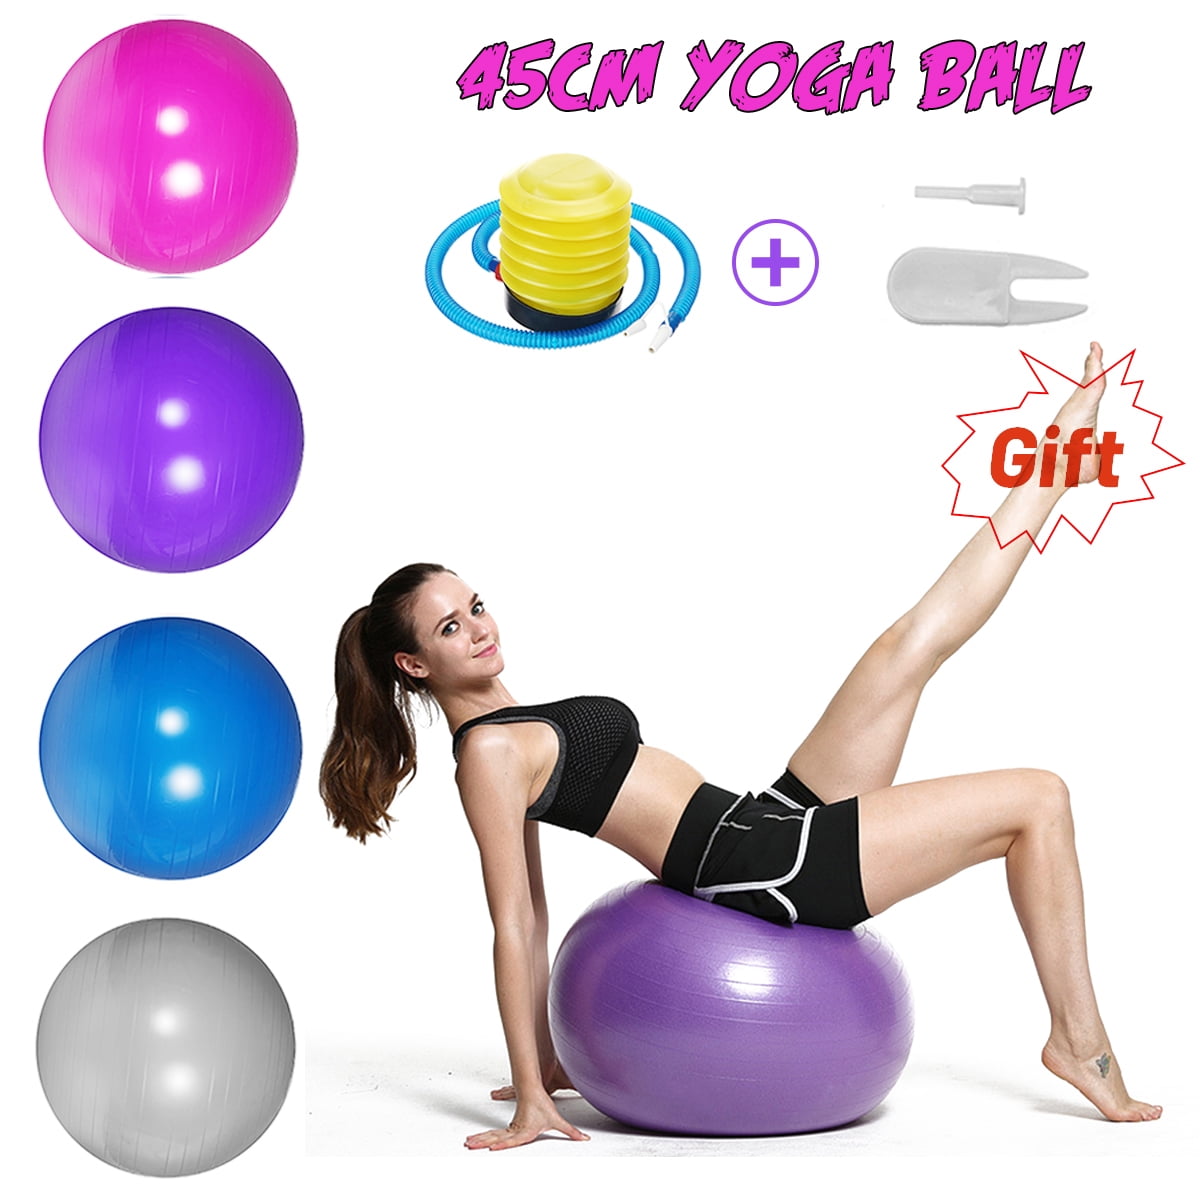 45cm Yoga Ball Fitness Sport Pilate Birthing Exercise Massage Gym Ball